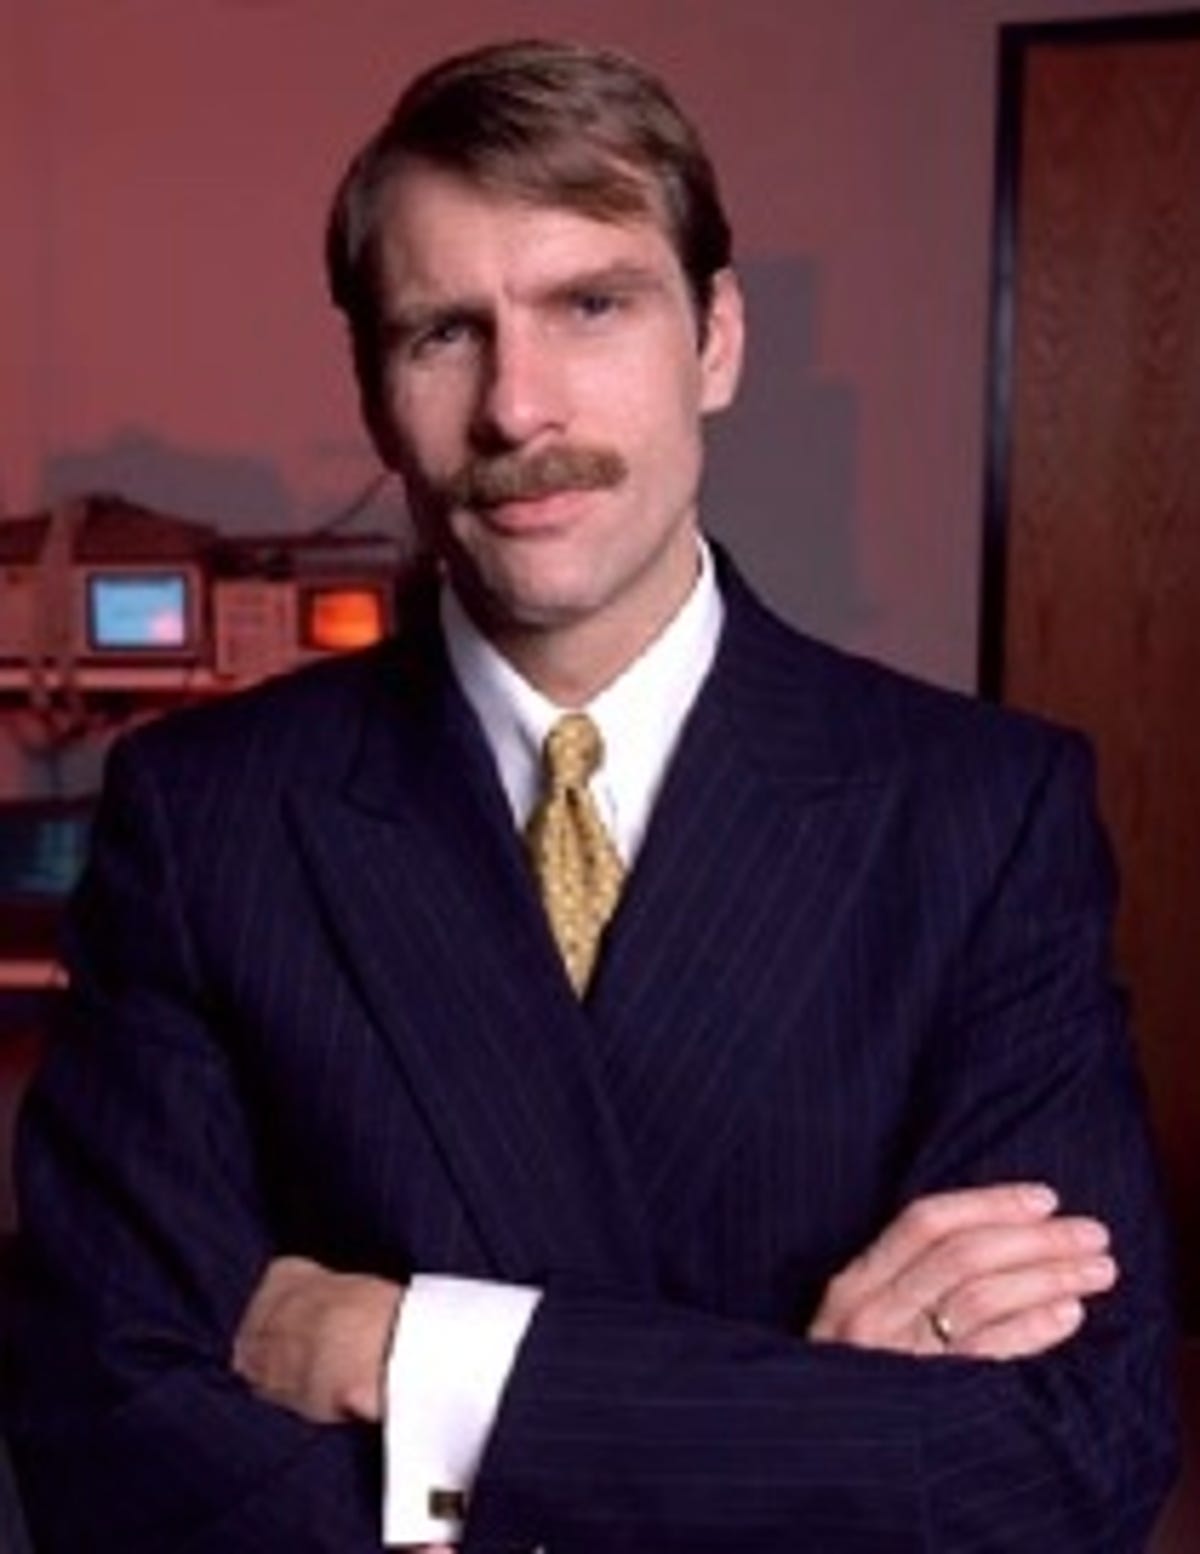 Broadcom co-founder and former CEO Henry T. Nicholas III